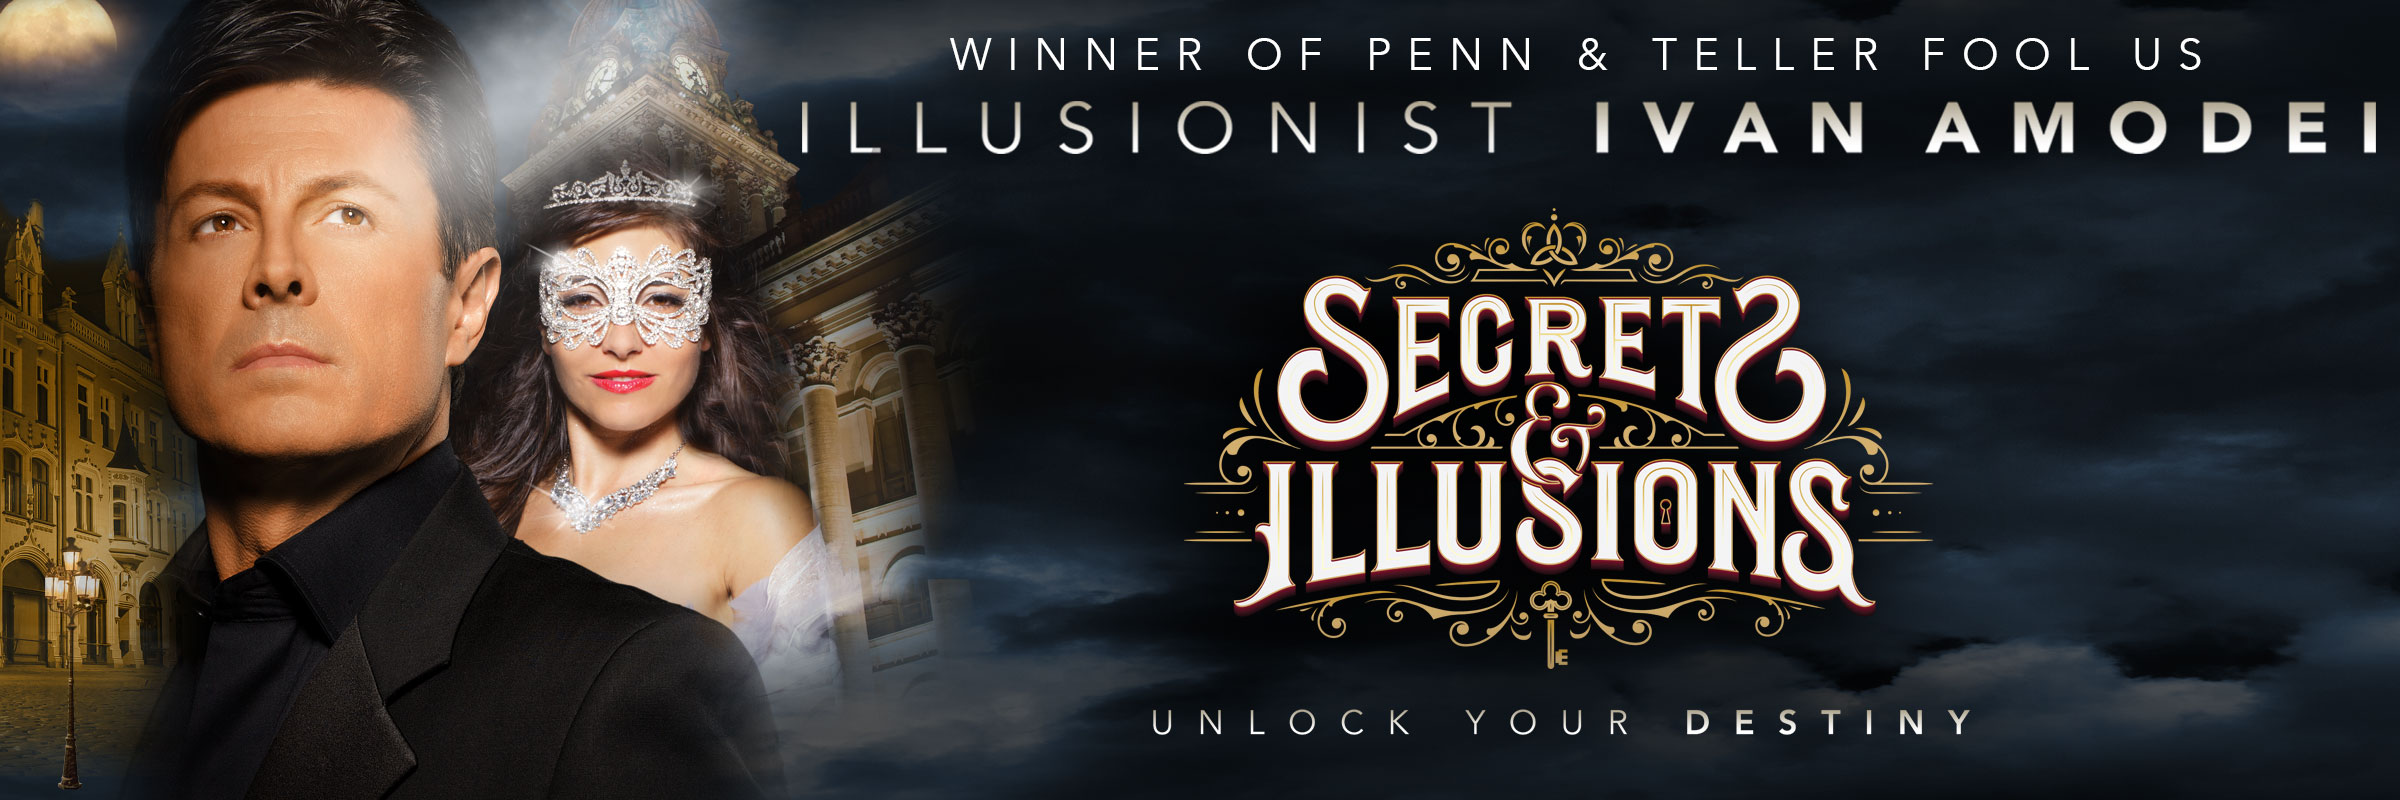 Secrets & Illusions